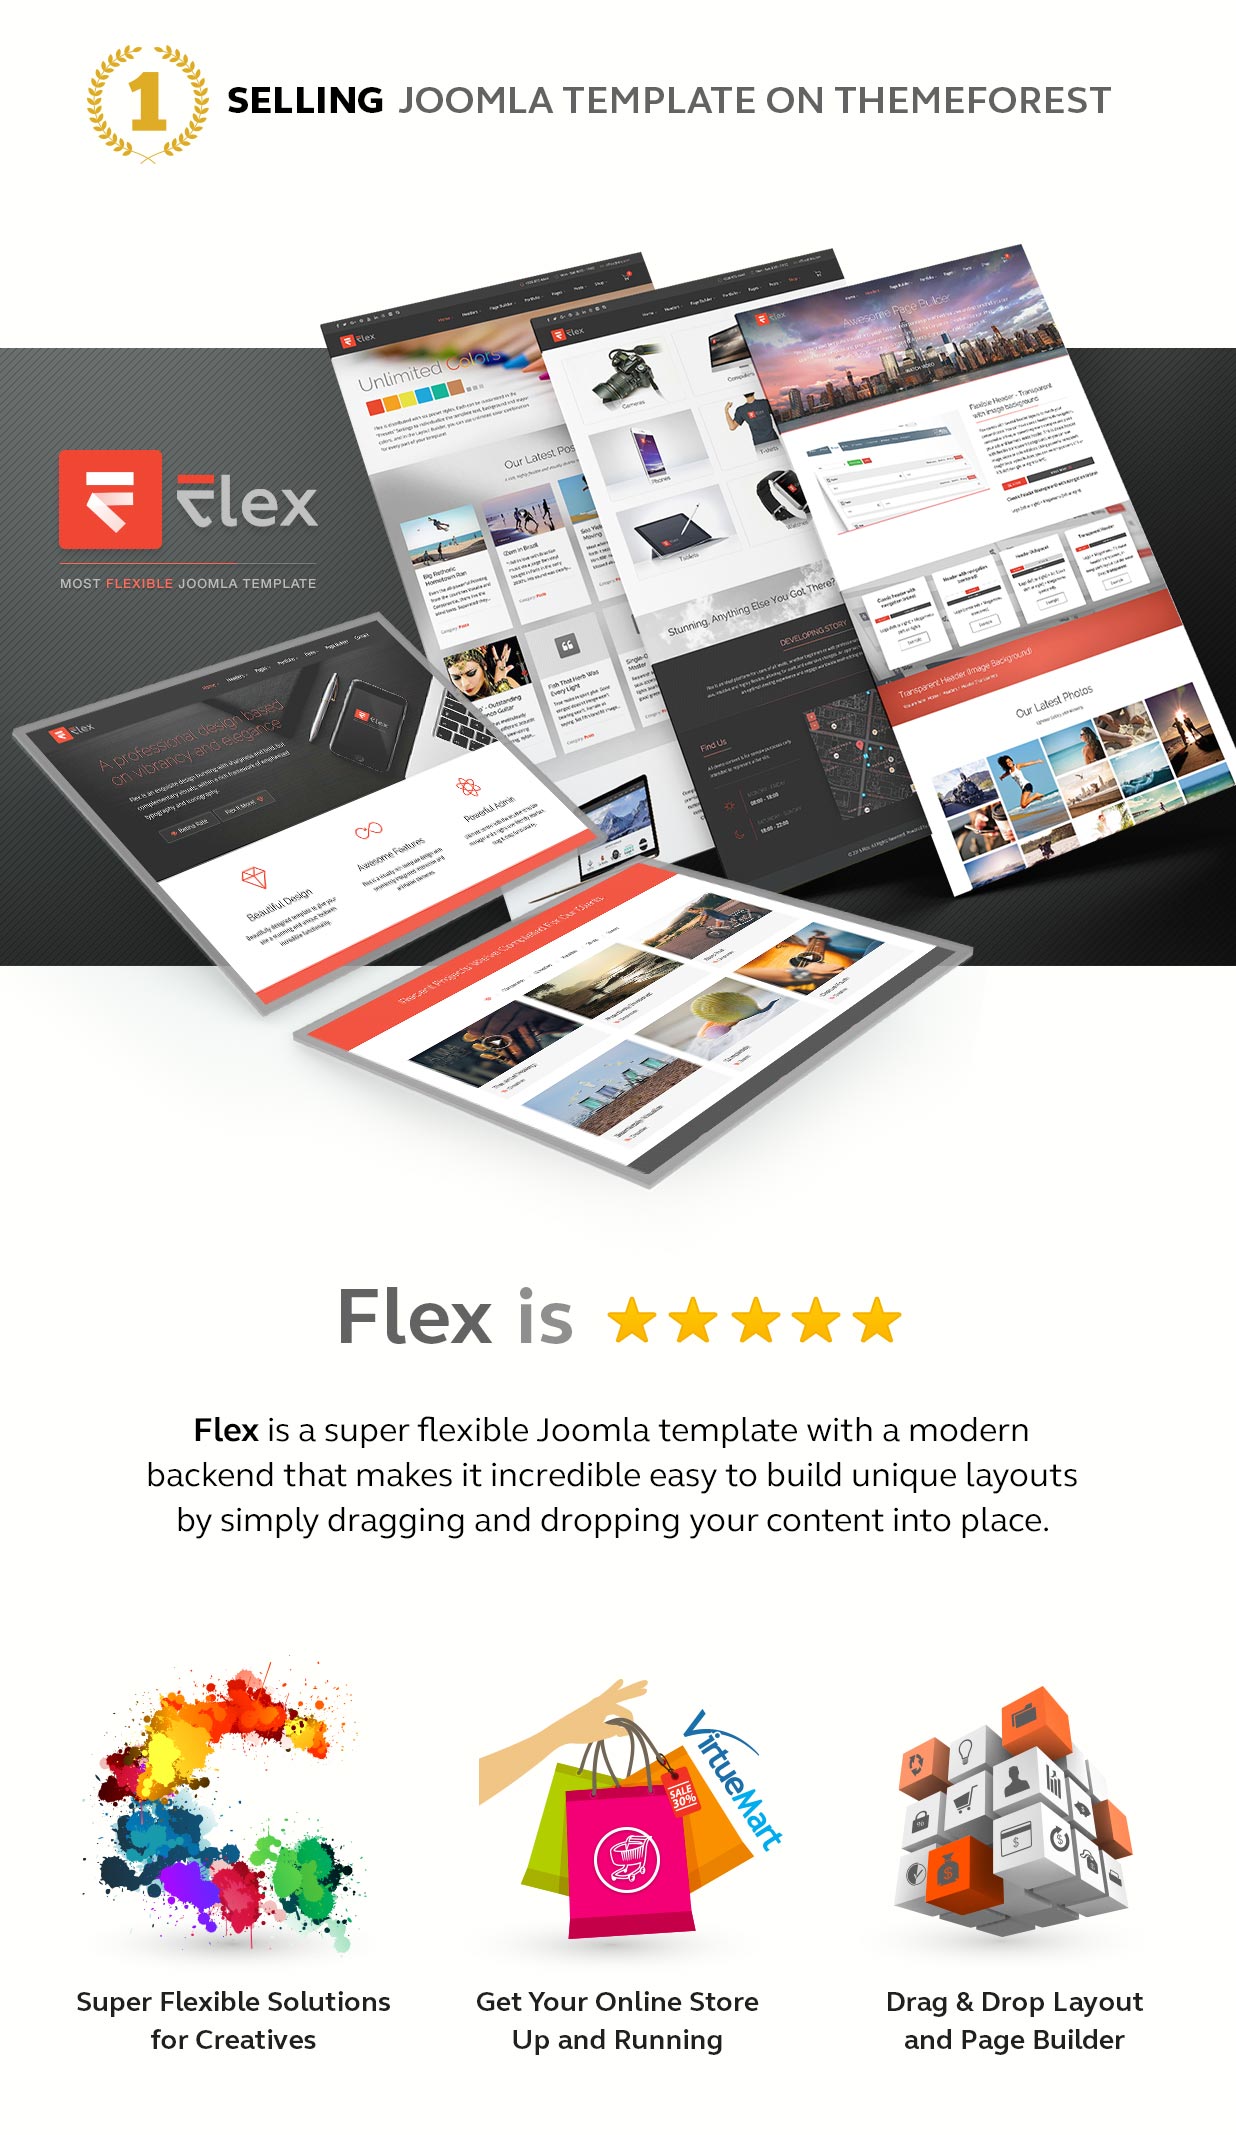 Flex - Multi-Purpose Joomla template - #1 Selling in 2016, 2017, 2018 and 2019